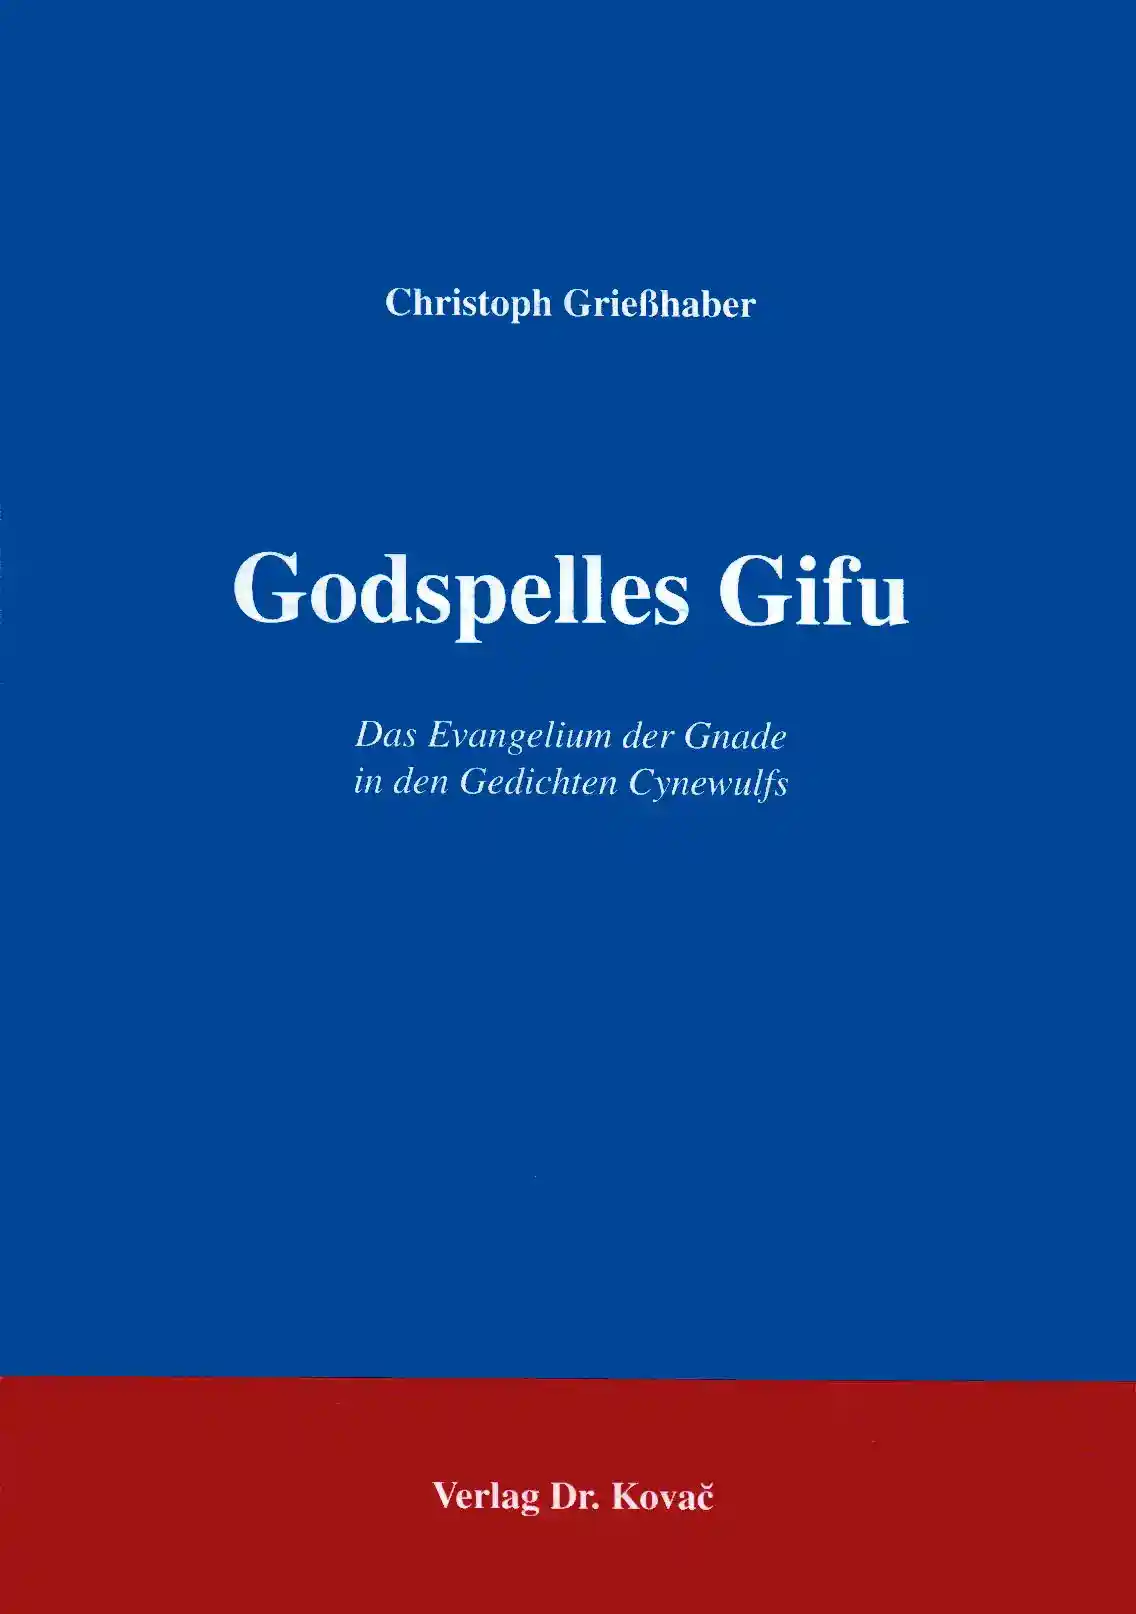 Godspelles Gifu (Forschungsarbeit)